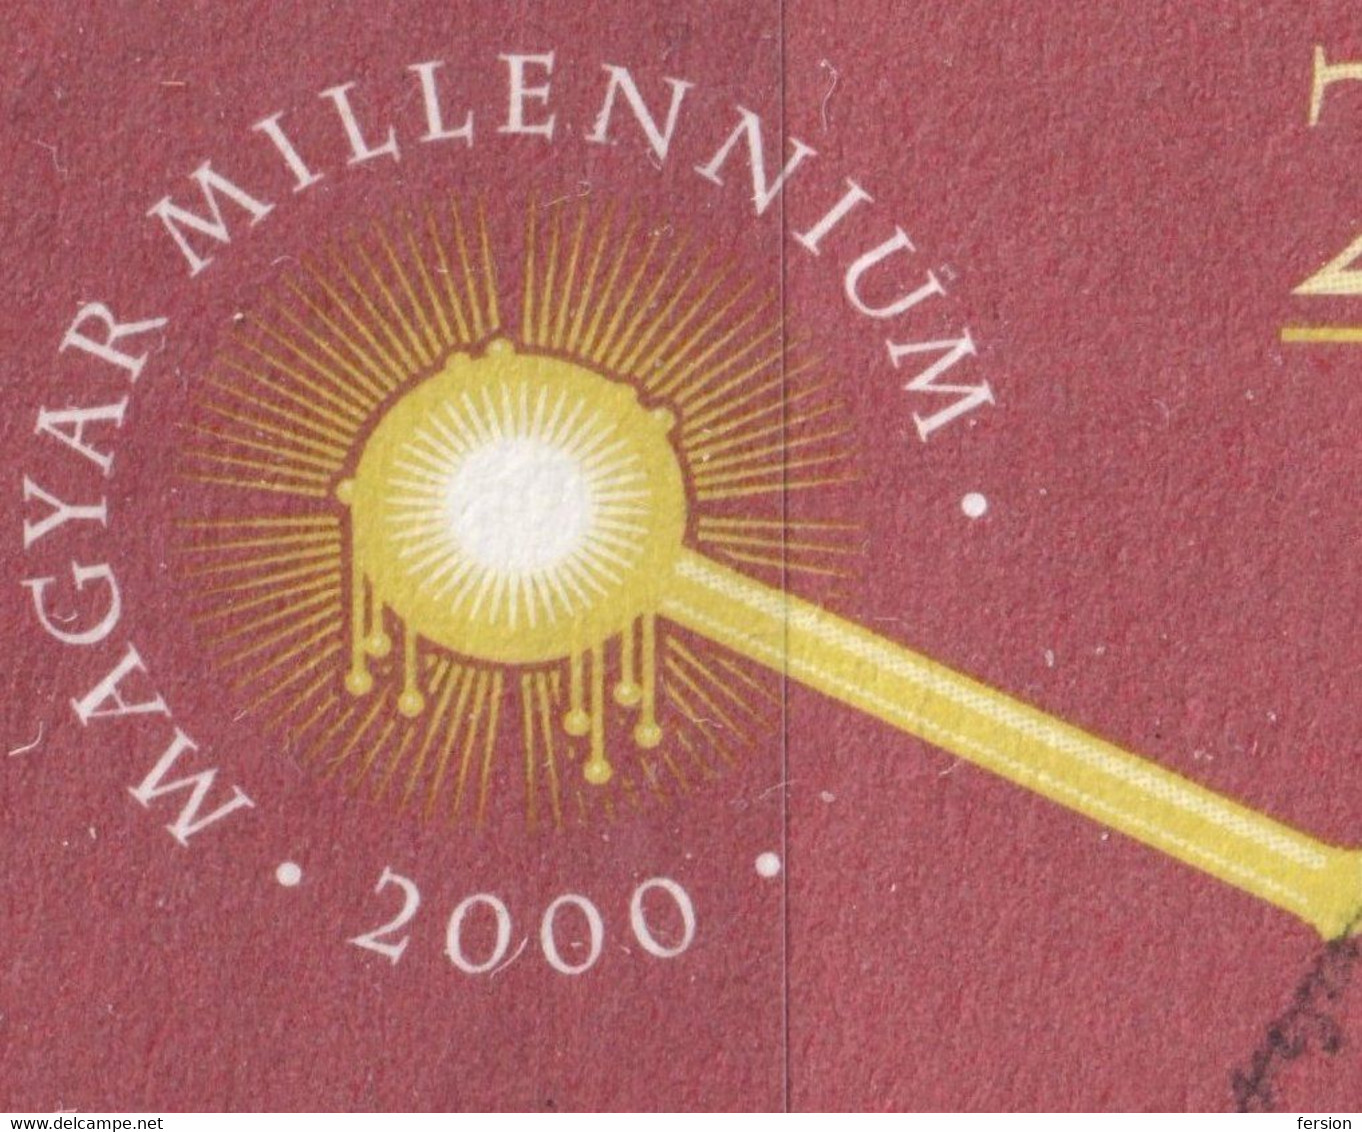 2000 2001 - Hungary - Millennium Flag / Scepter Sceptre - Used - Coat Of Arms - LOT FULL Set - Usado